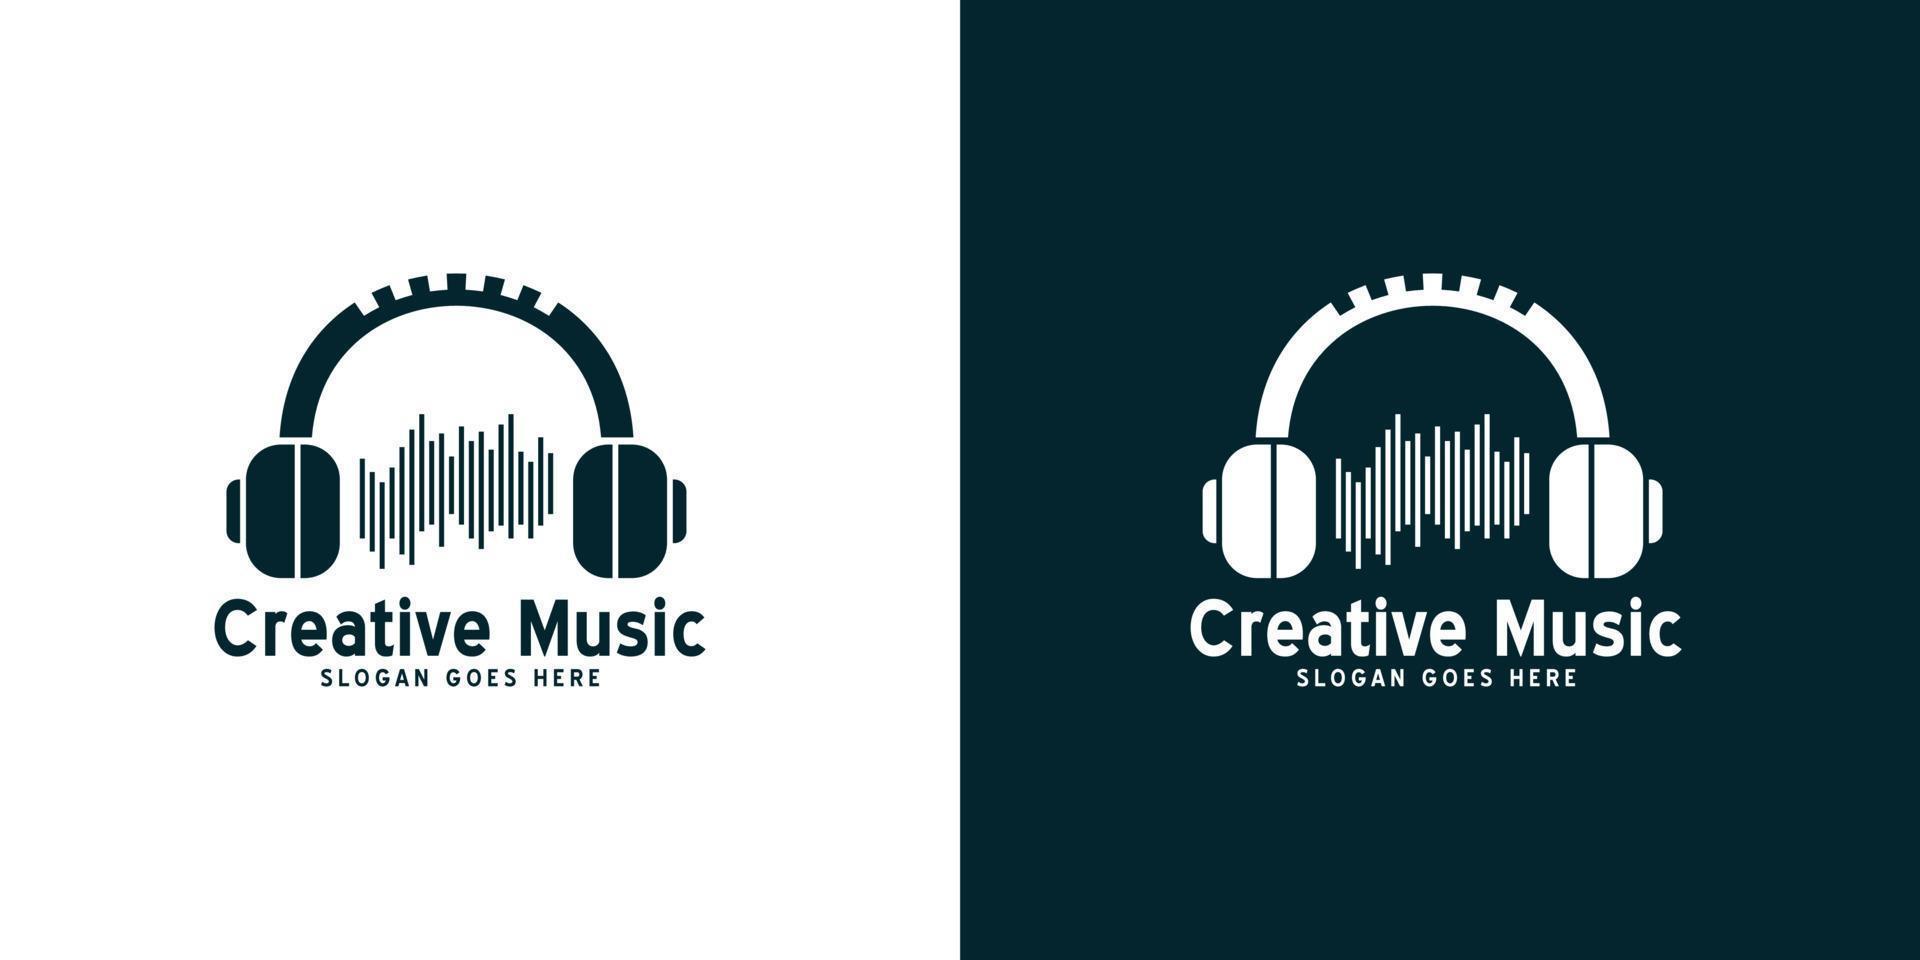 kreativ musik studio logotyp modern minimalistisk vektor